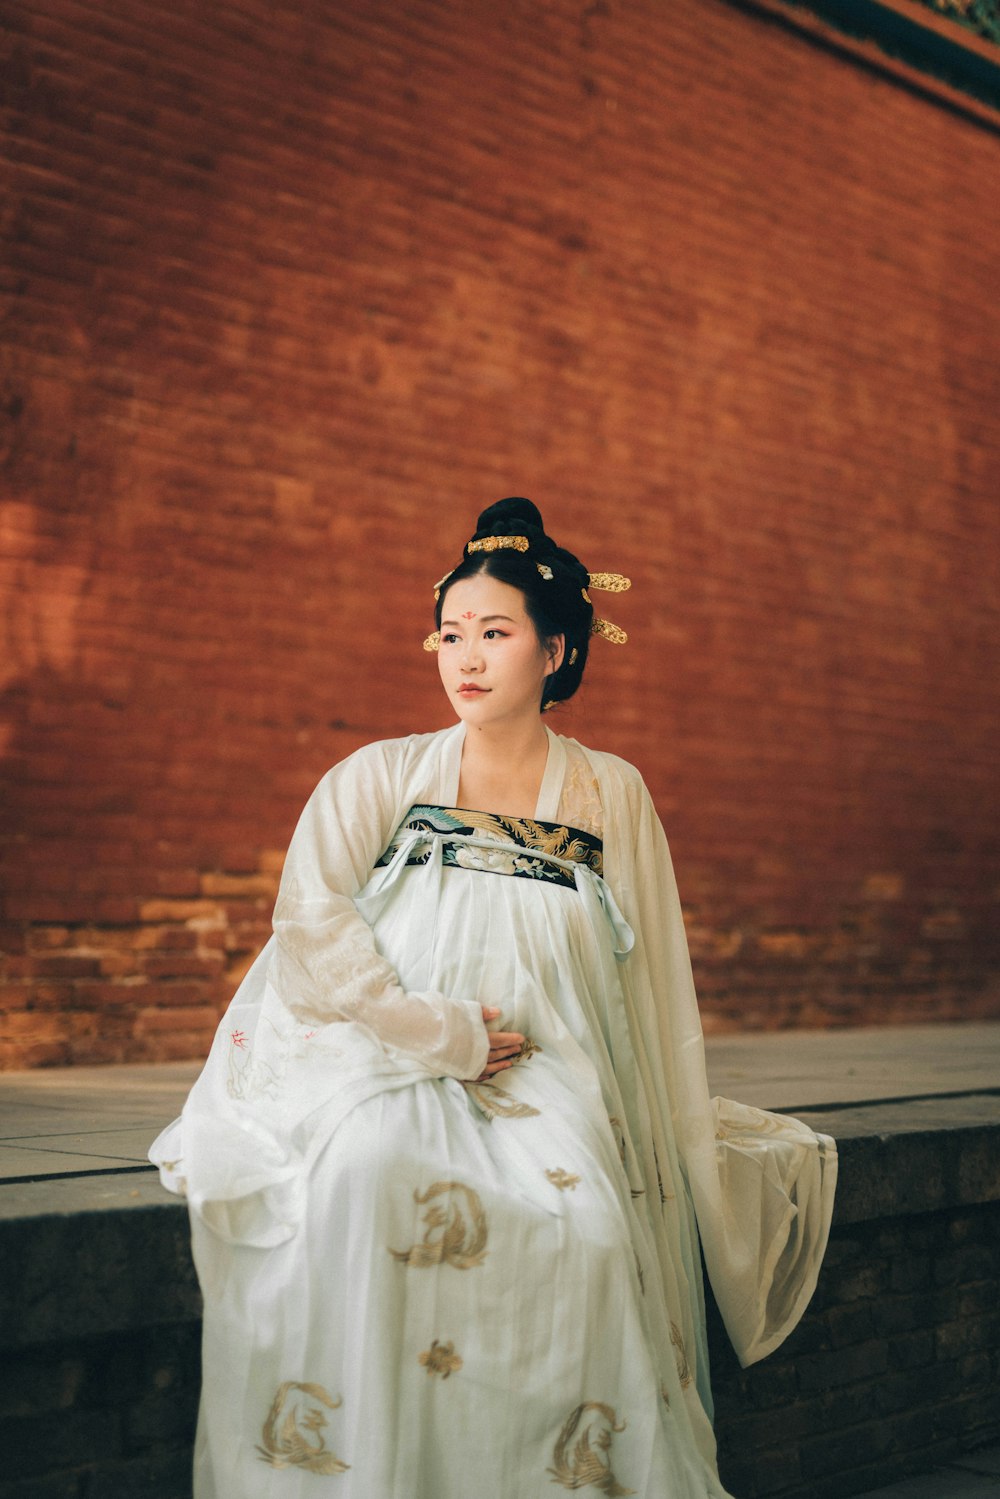 woman wearing white traditional dress